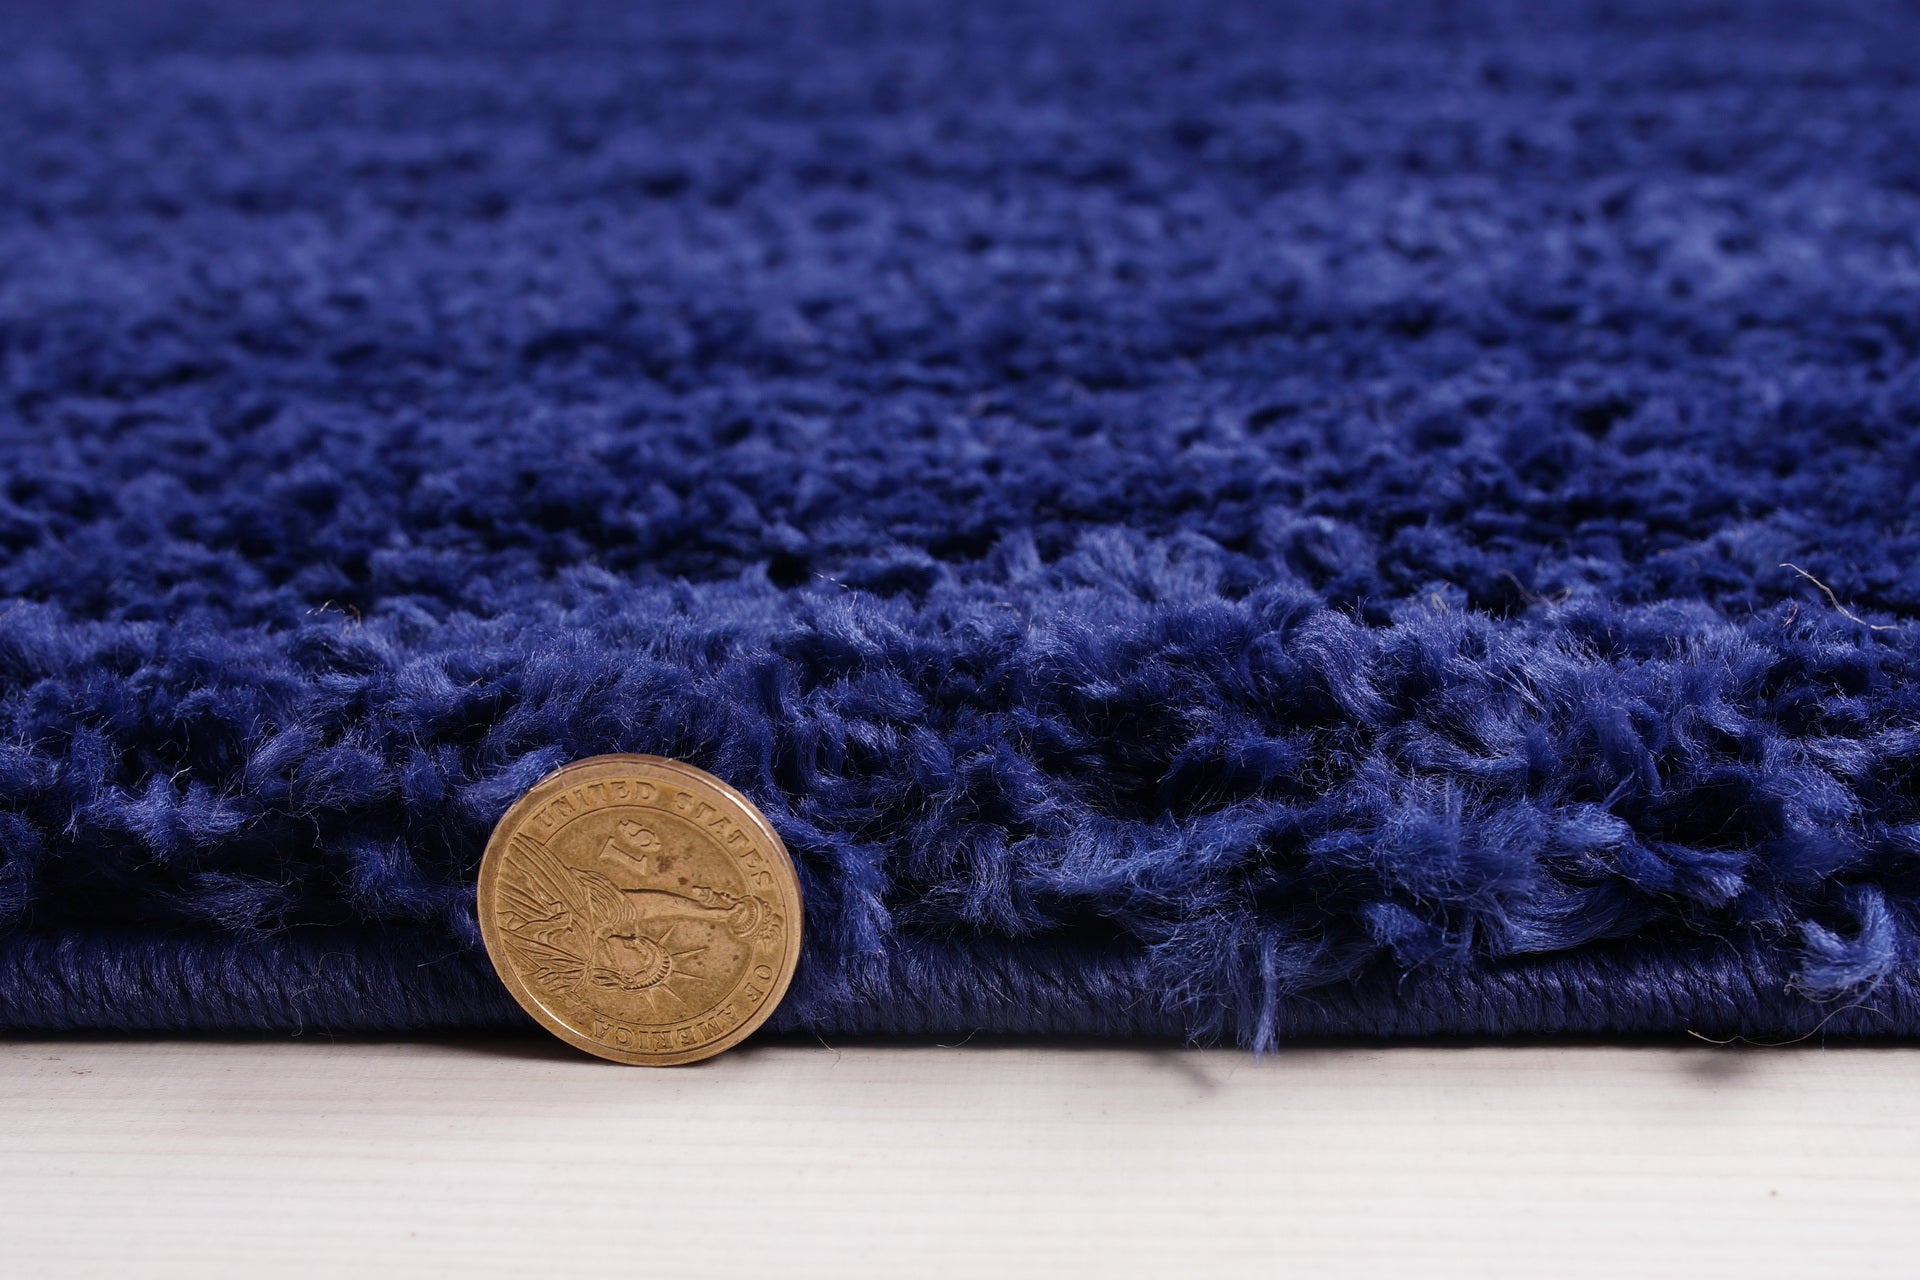 ladole rugs solid color shaggy meknes durable beautiful turkish indoor small mat doormat rug in navy blue 110 x 211 57cm x 90cm 6x8, 6x9 ft Living Room, Bedroom, Dining Area, Kitchen Carpet